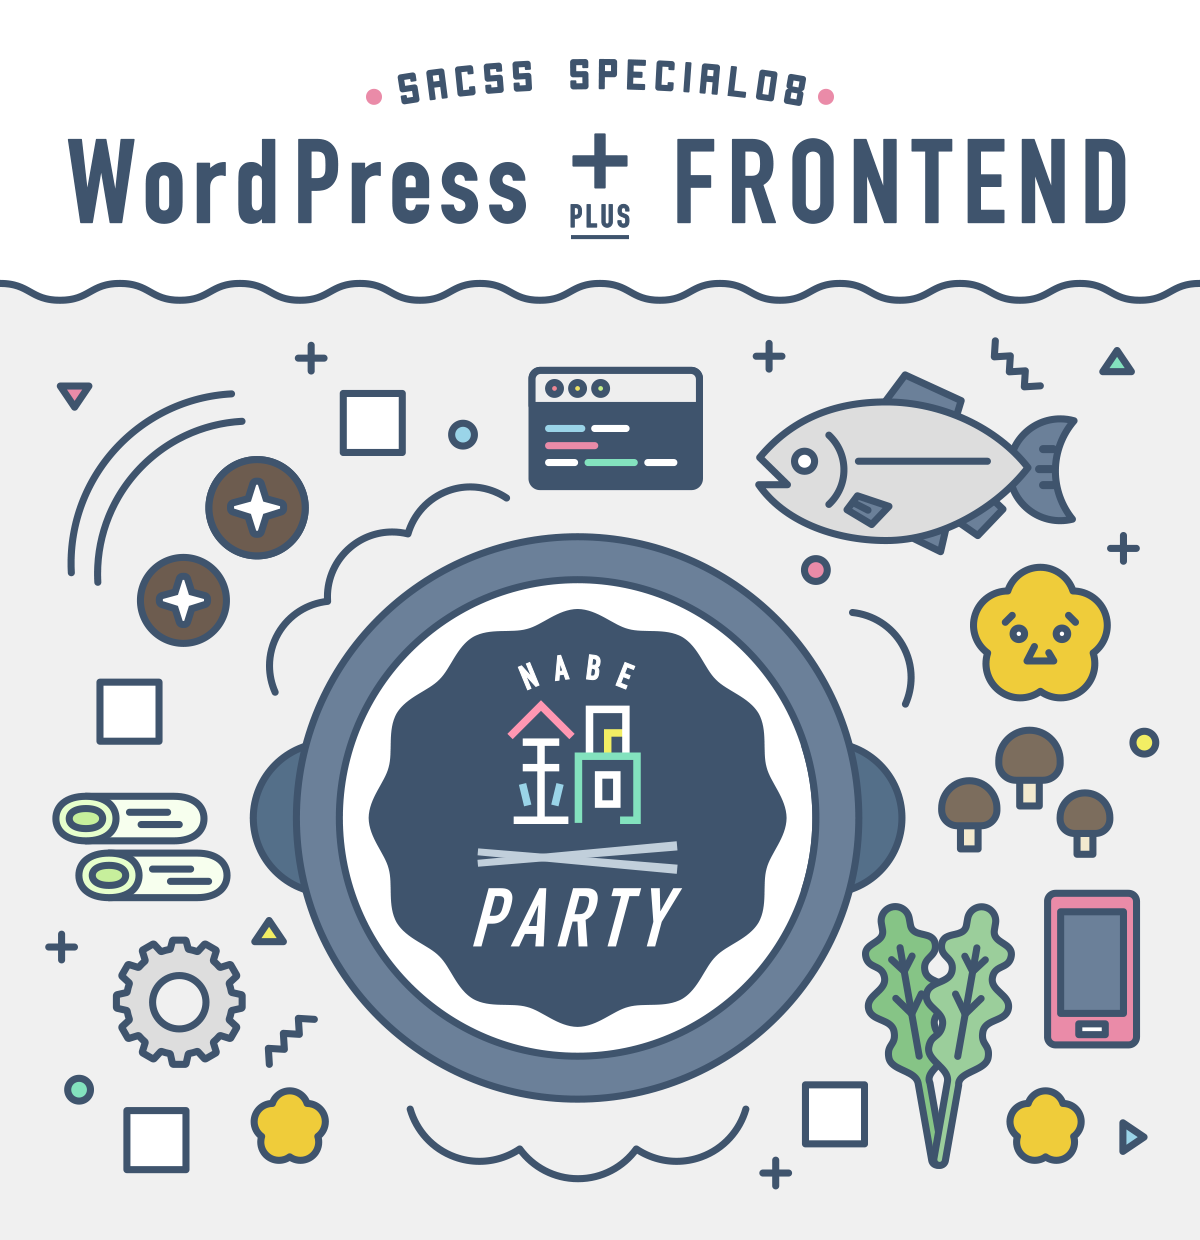 SaCSS 2016年12月3日『SaCSS Special08 : WordPress + フロントエンド 鍋パーティー』